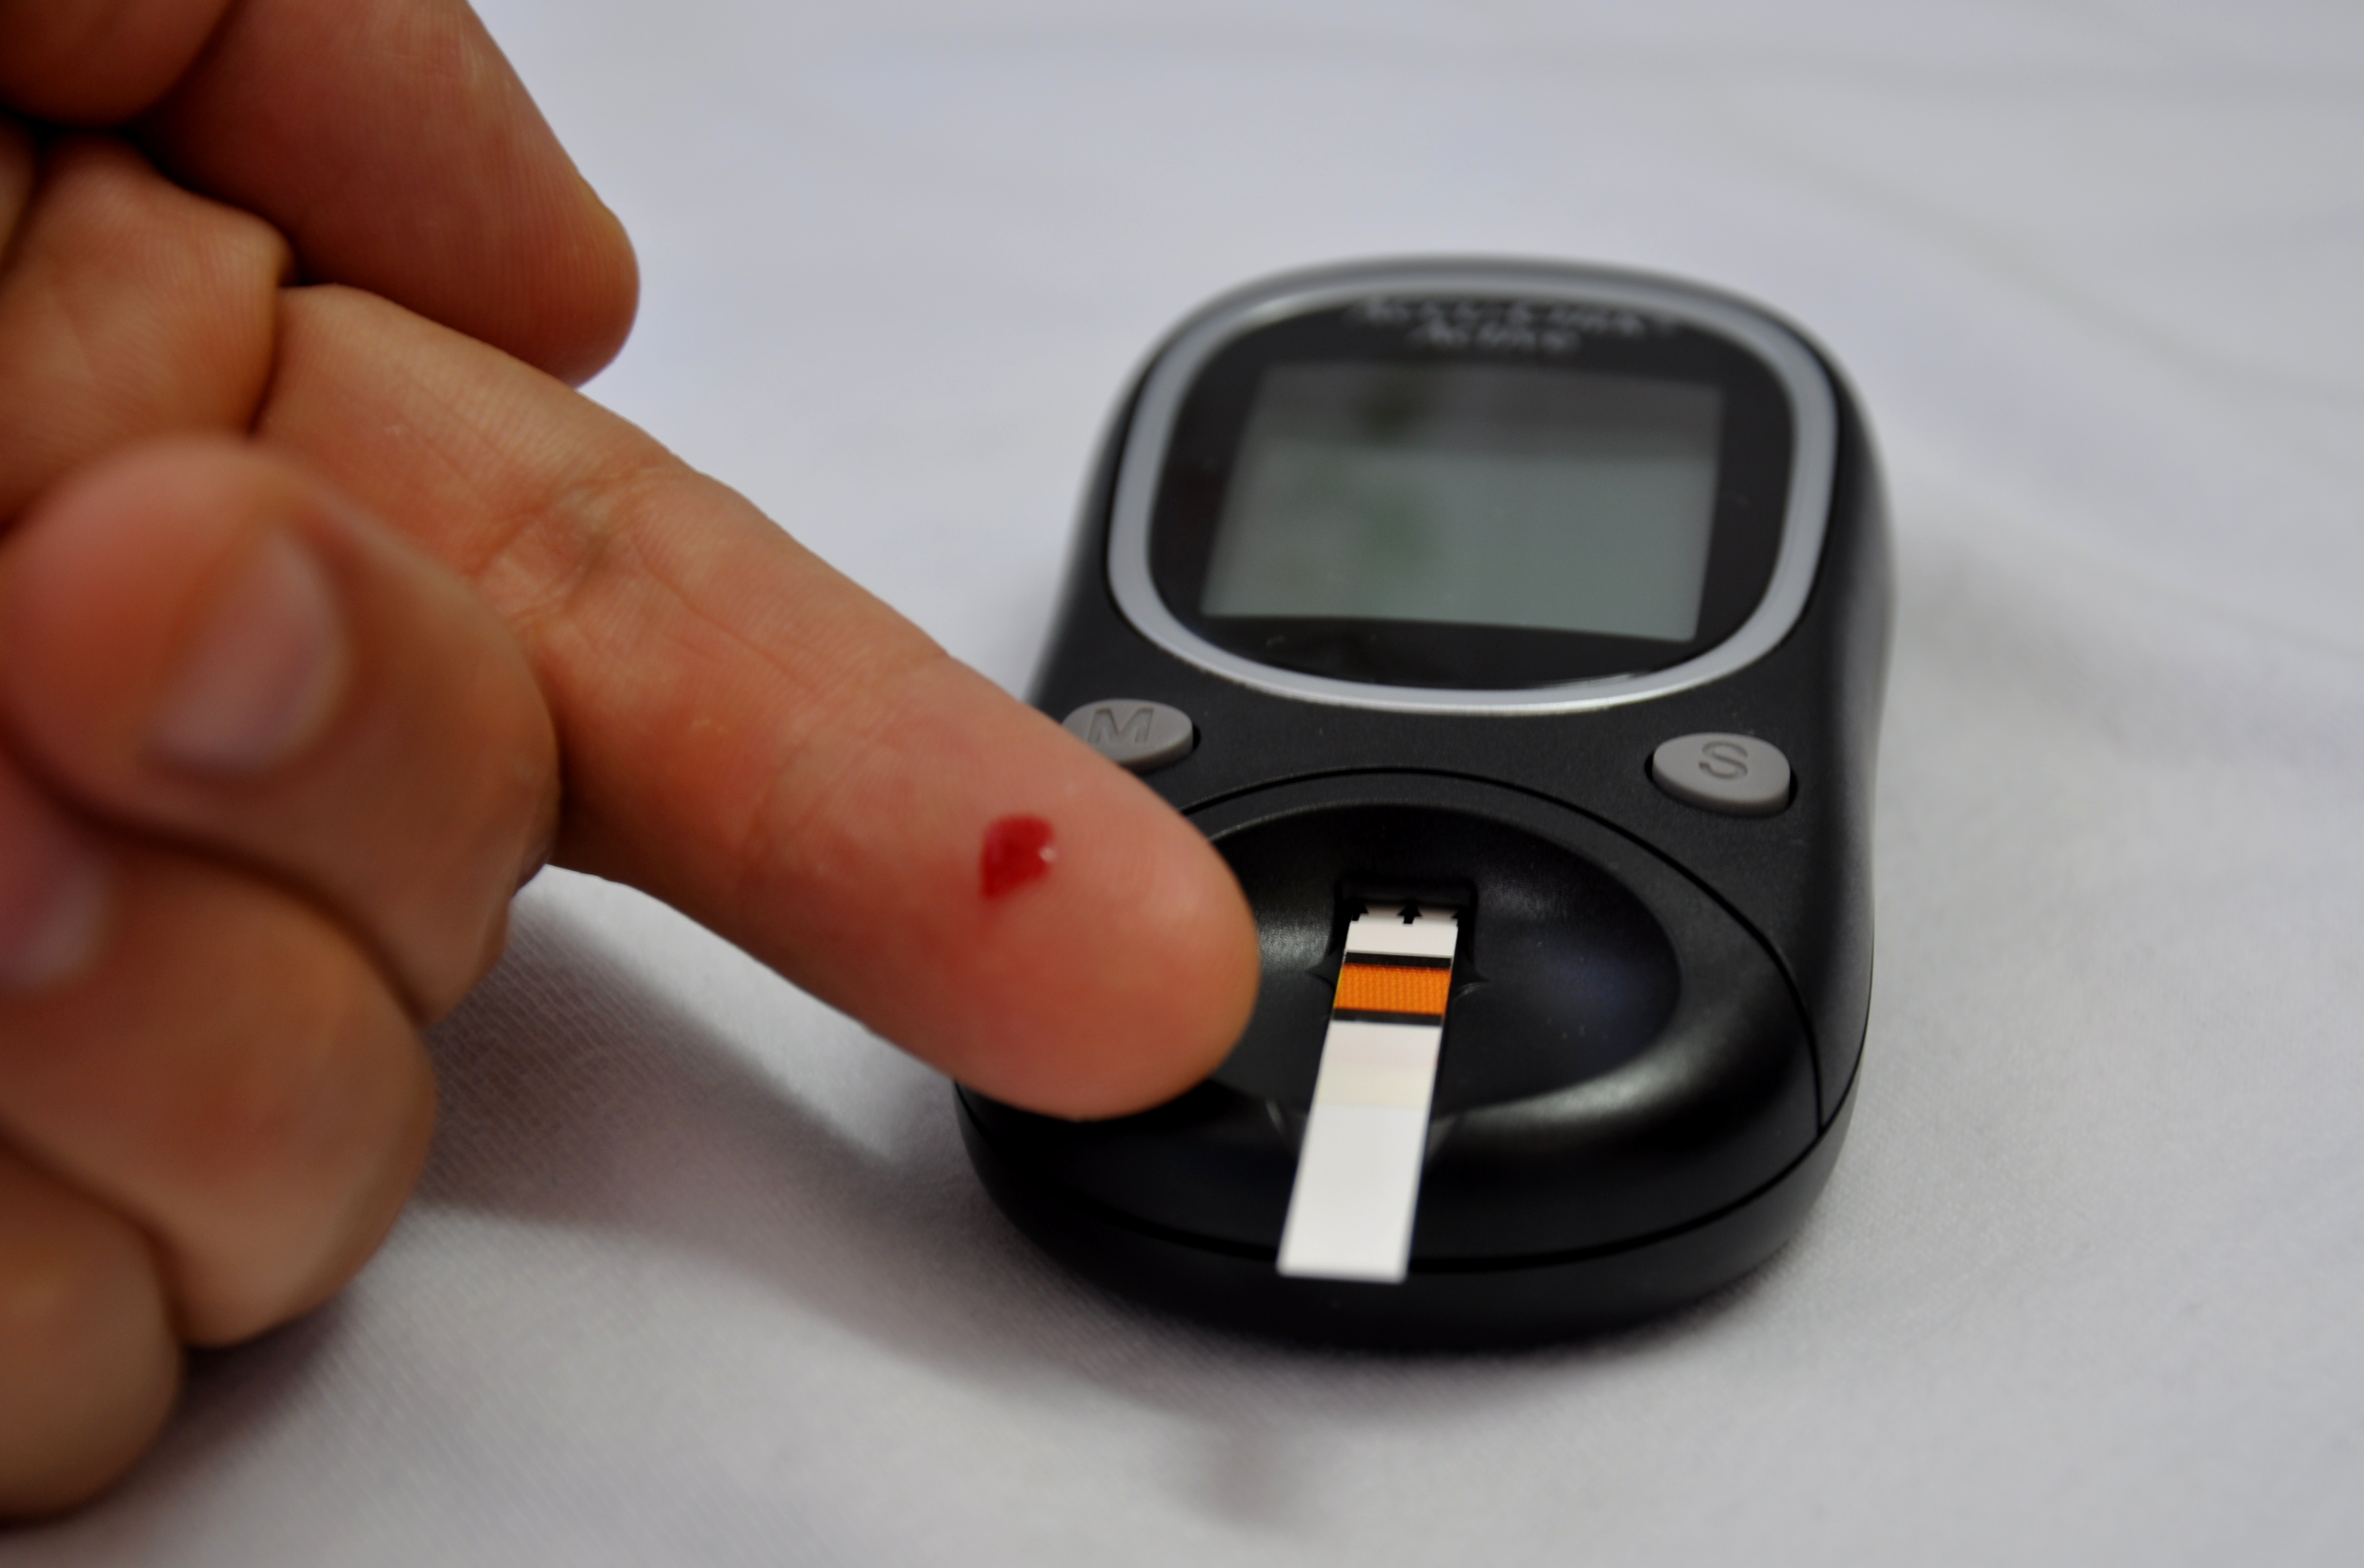 Тест для измерения сахара в крови